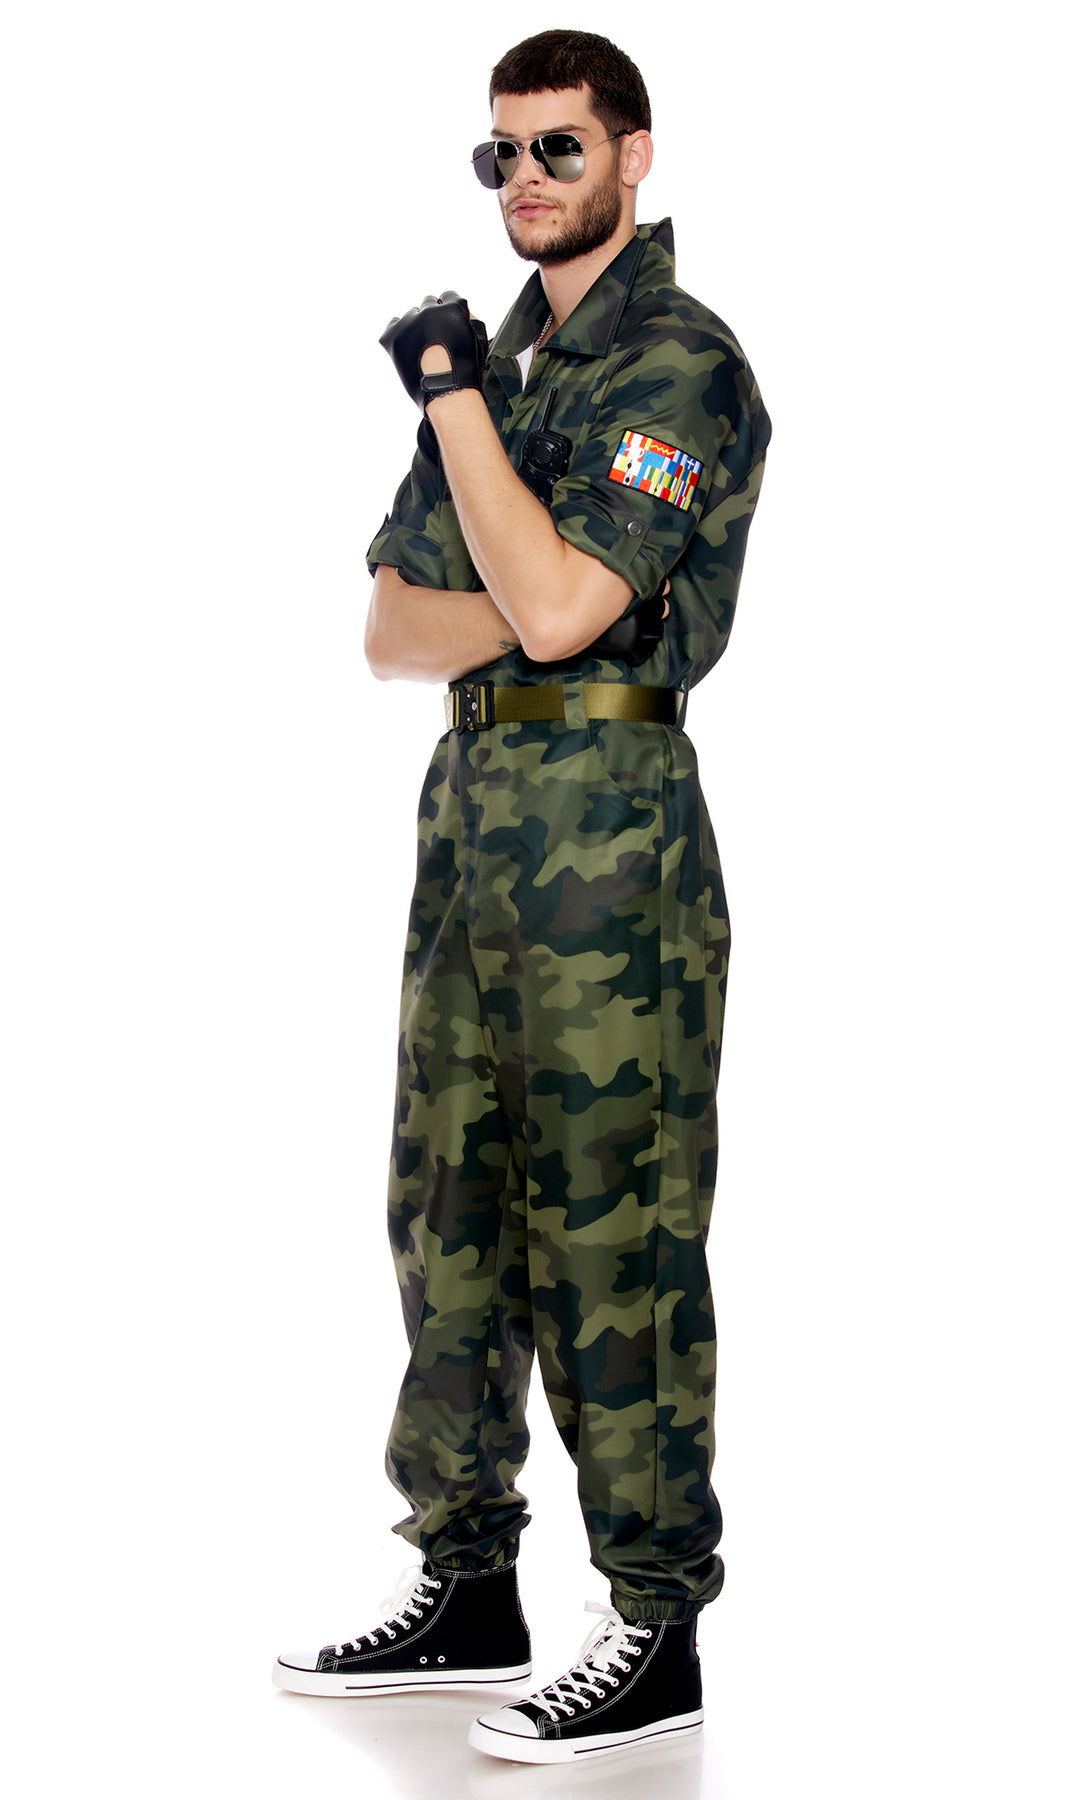 Combat Ready Men's Soldier Costume